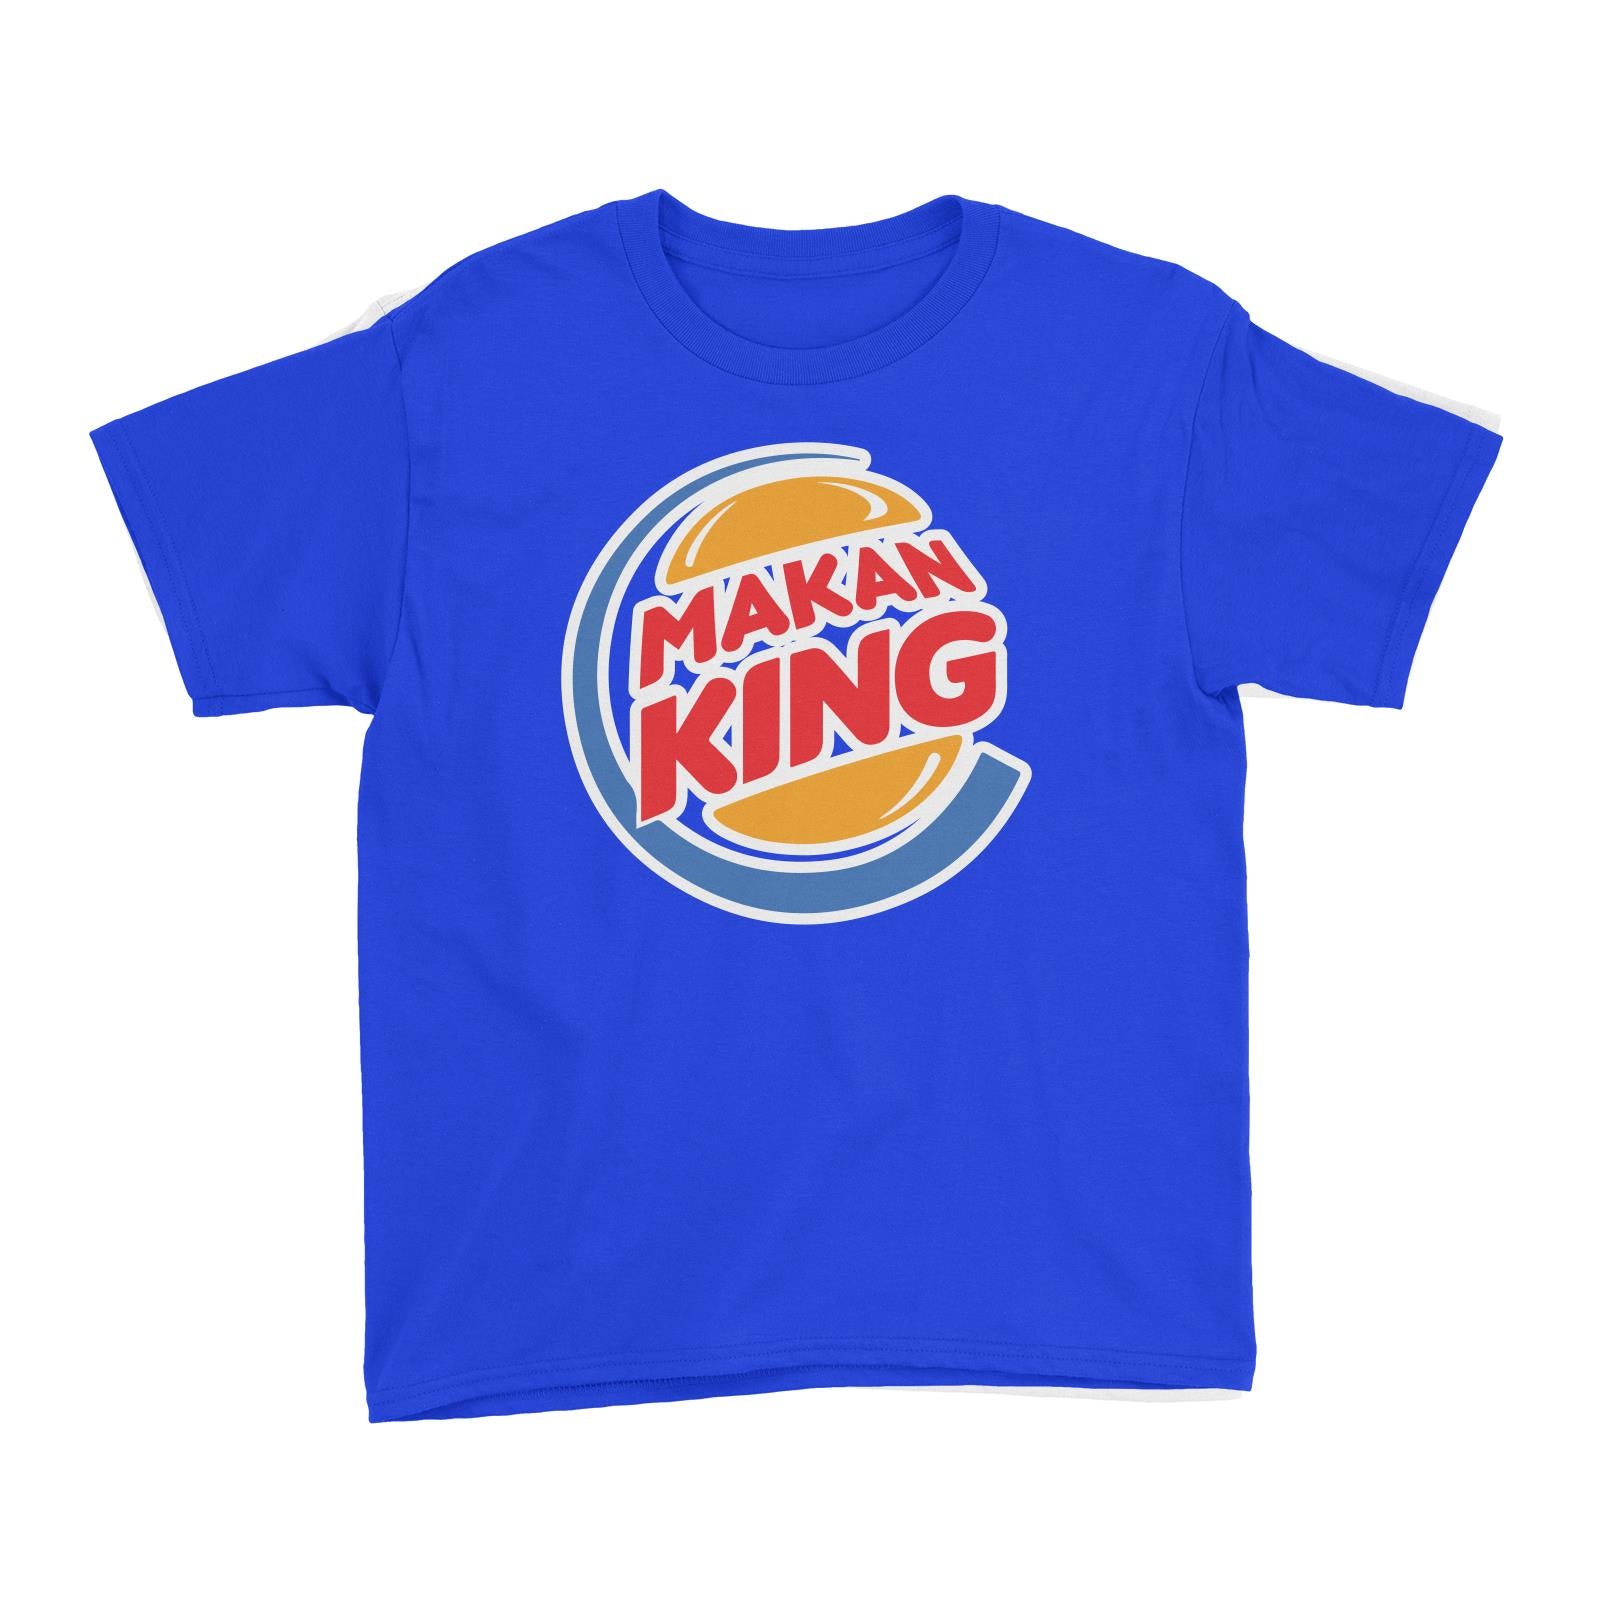 Slang Statement Makan King Kid's T-Shirt